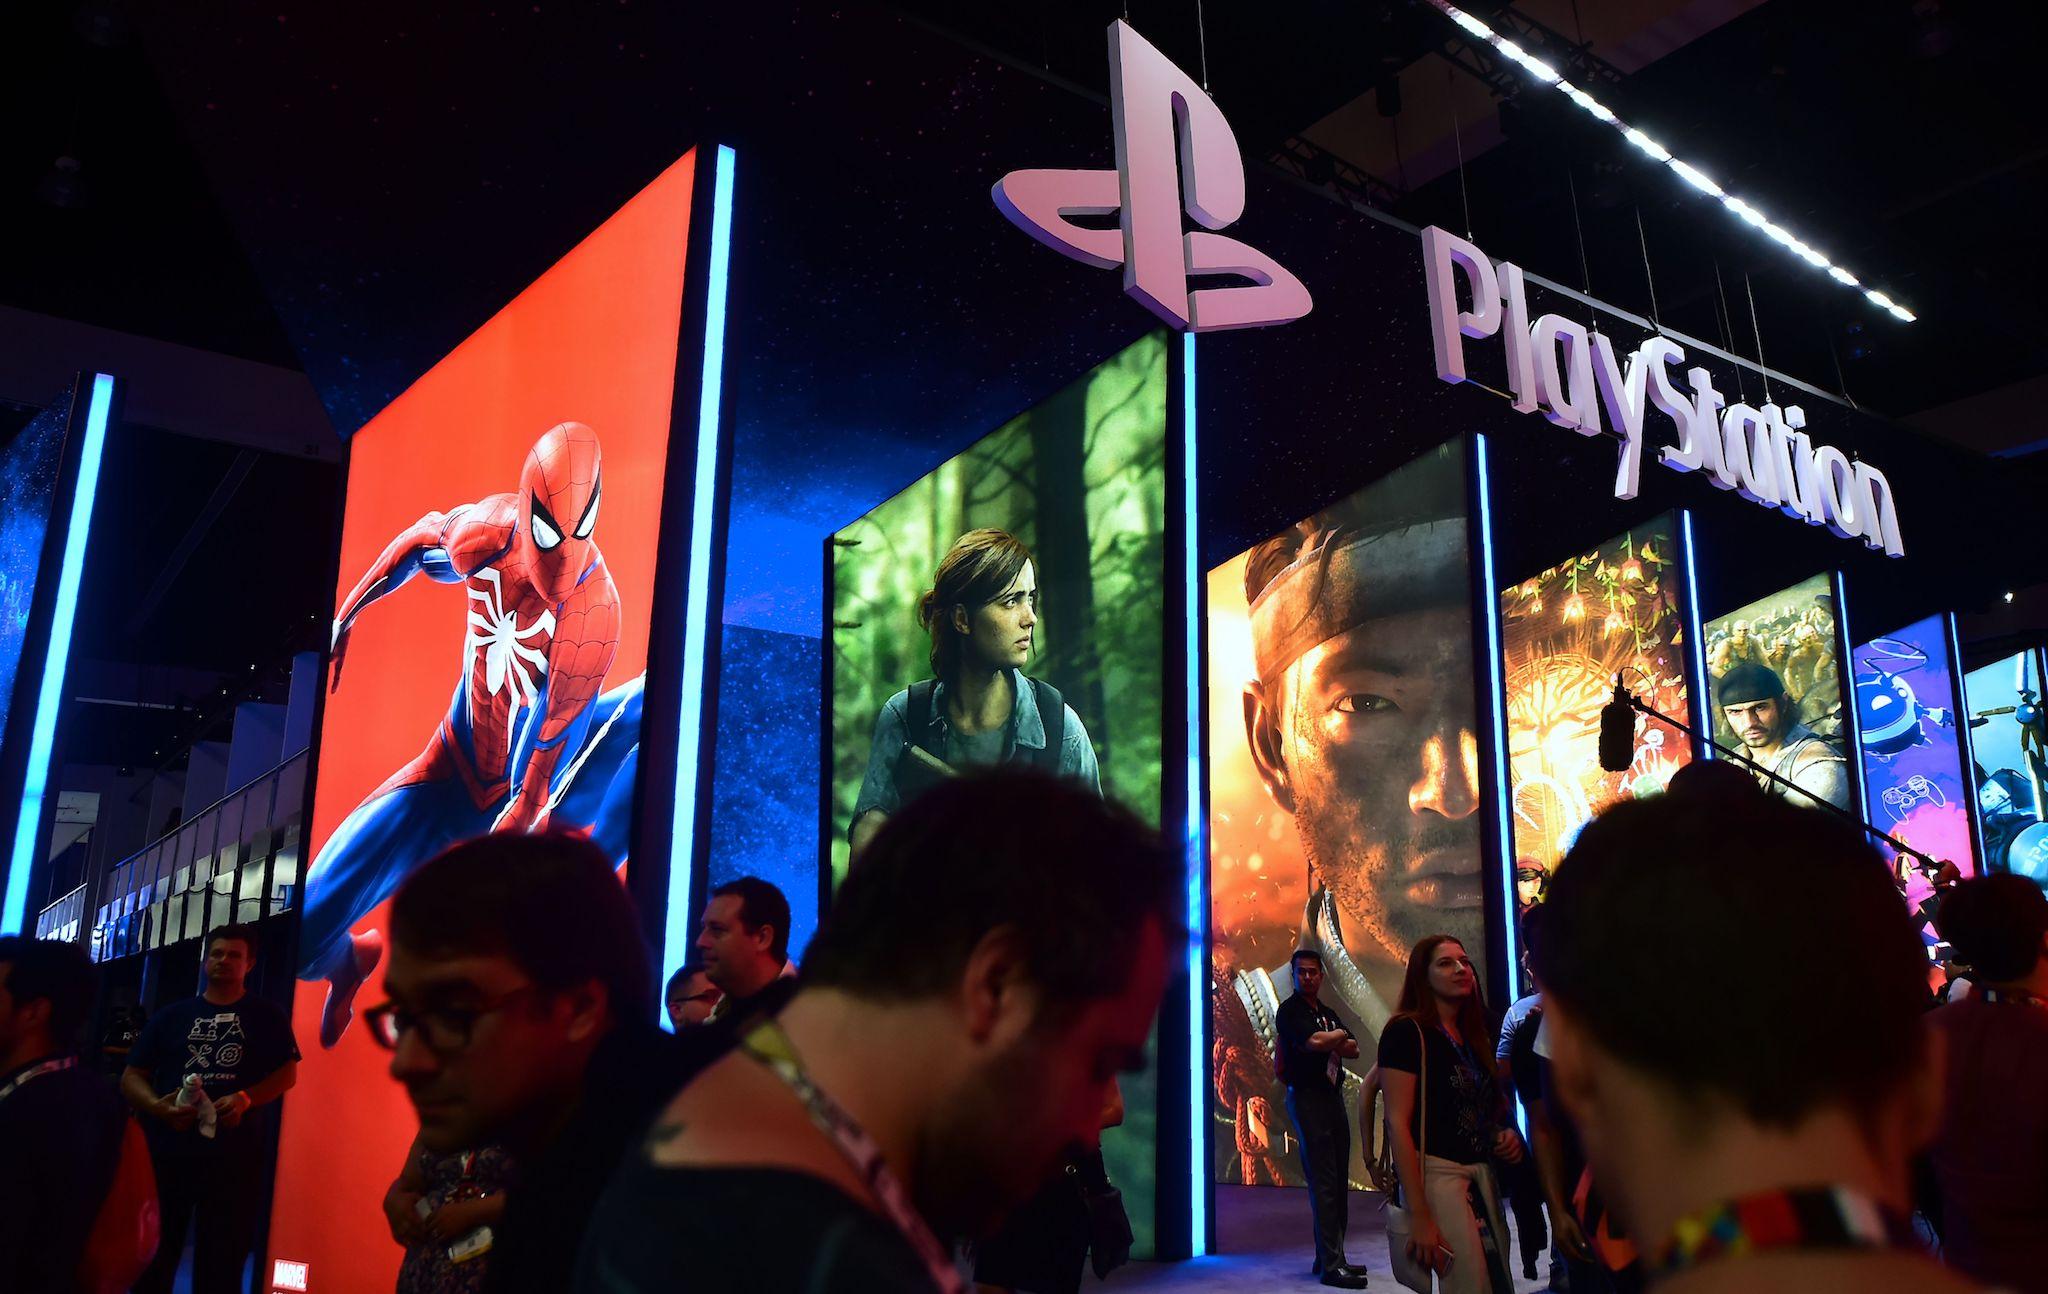 PlayStation Plus: Free Games for September 2018 – PlayStation.Blog